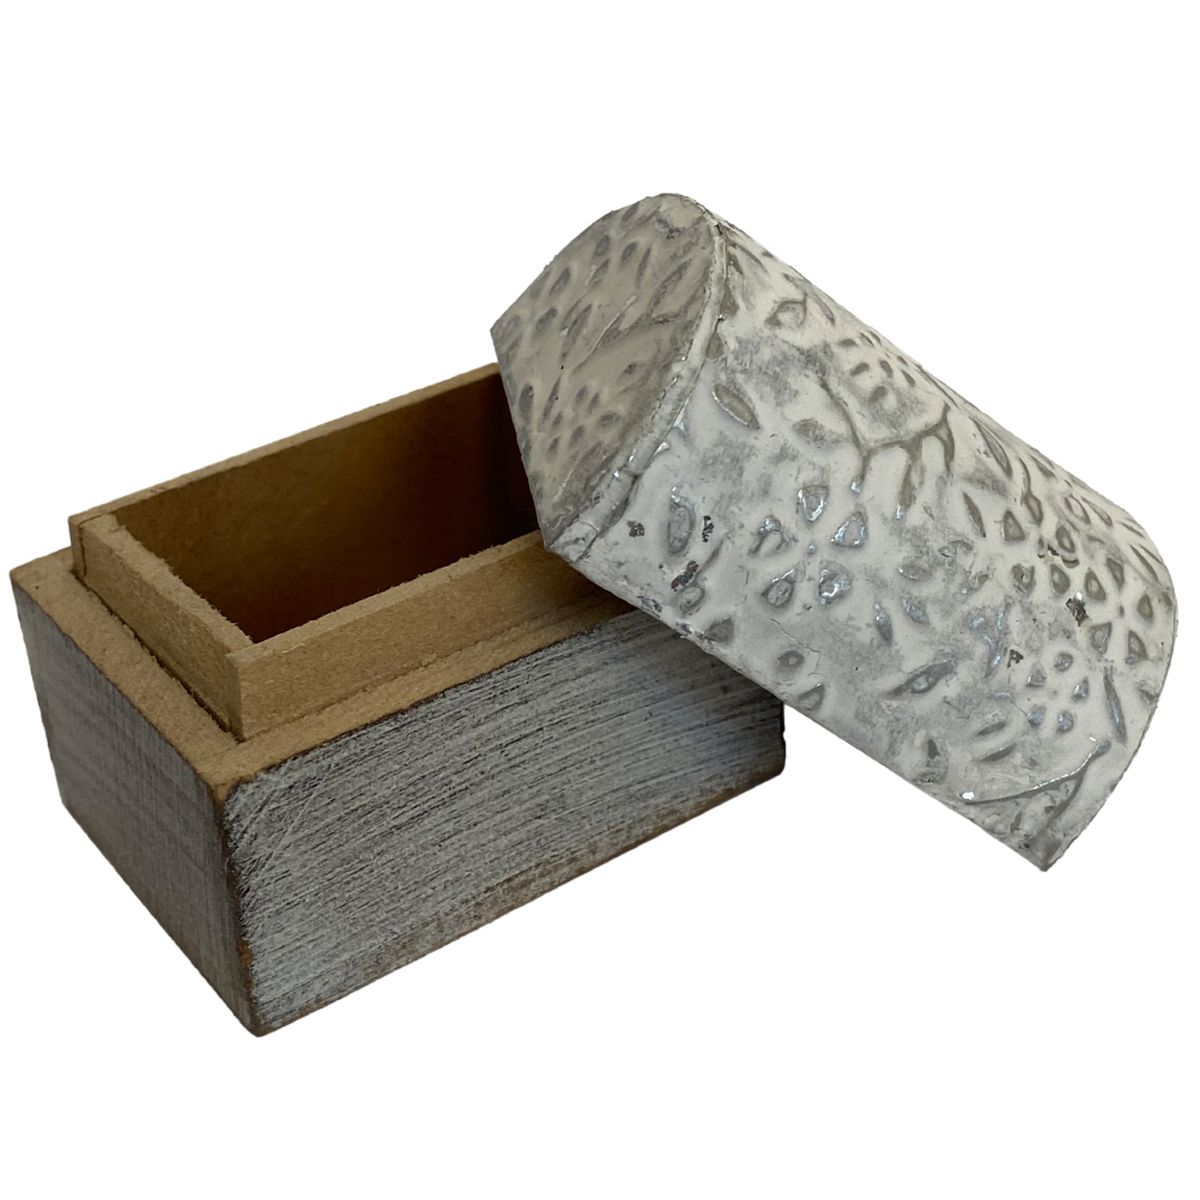 Mini White and natural wooden box